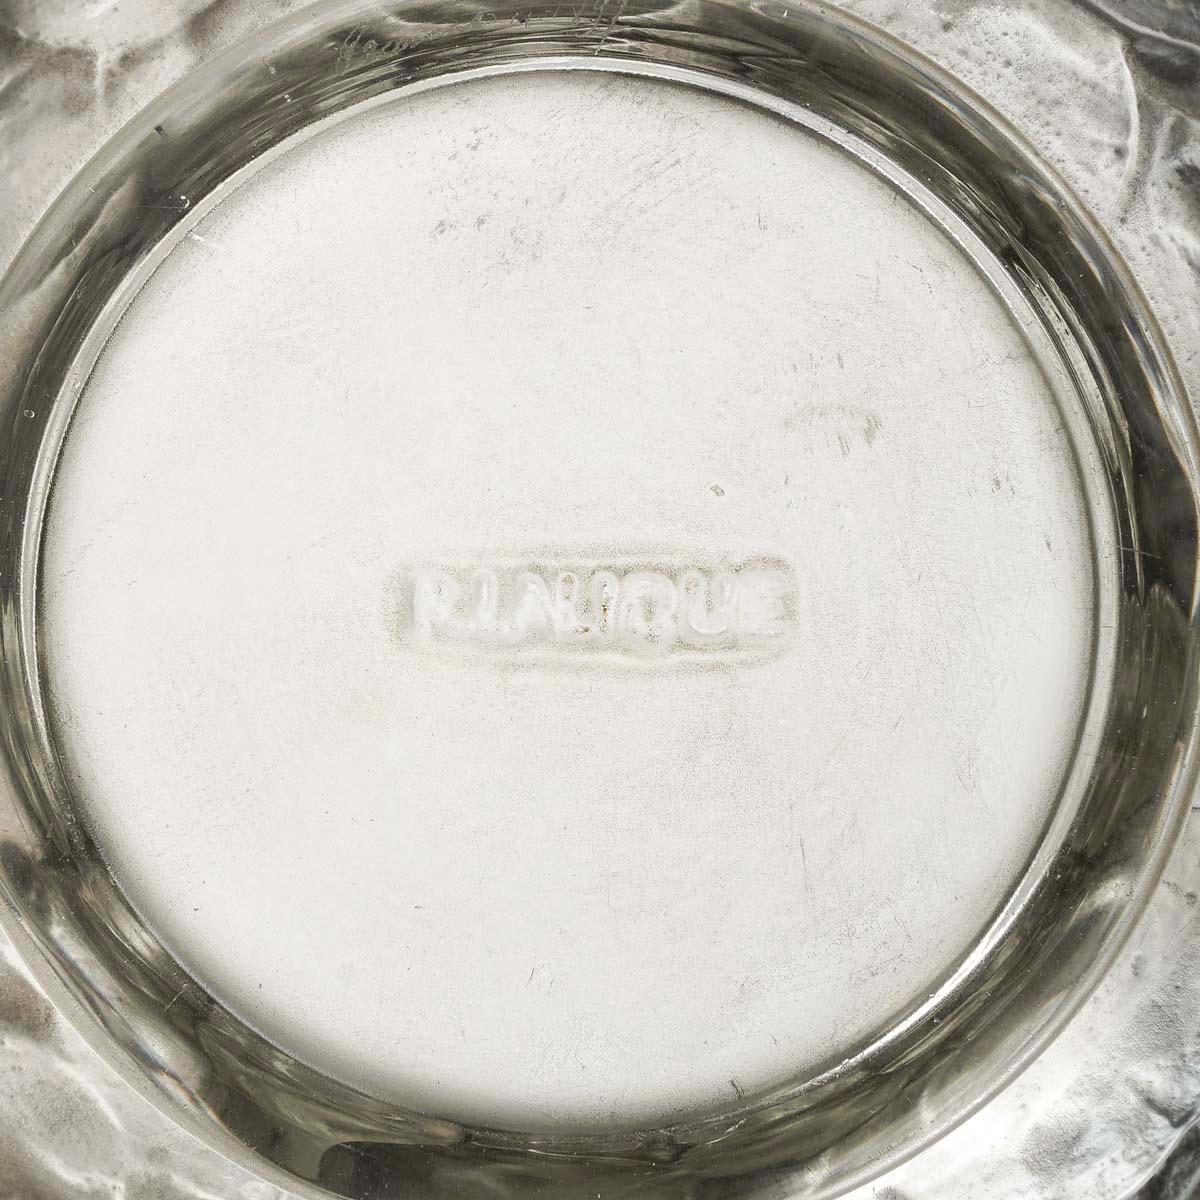 French 1914 René Lalique Vase Monnaie du Pape Frosted Glass Grey Patina For Sale